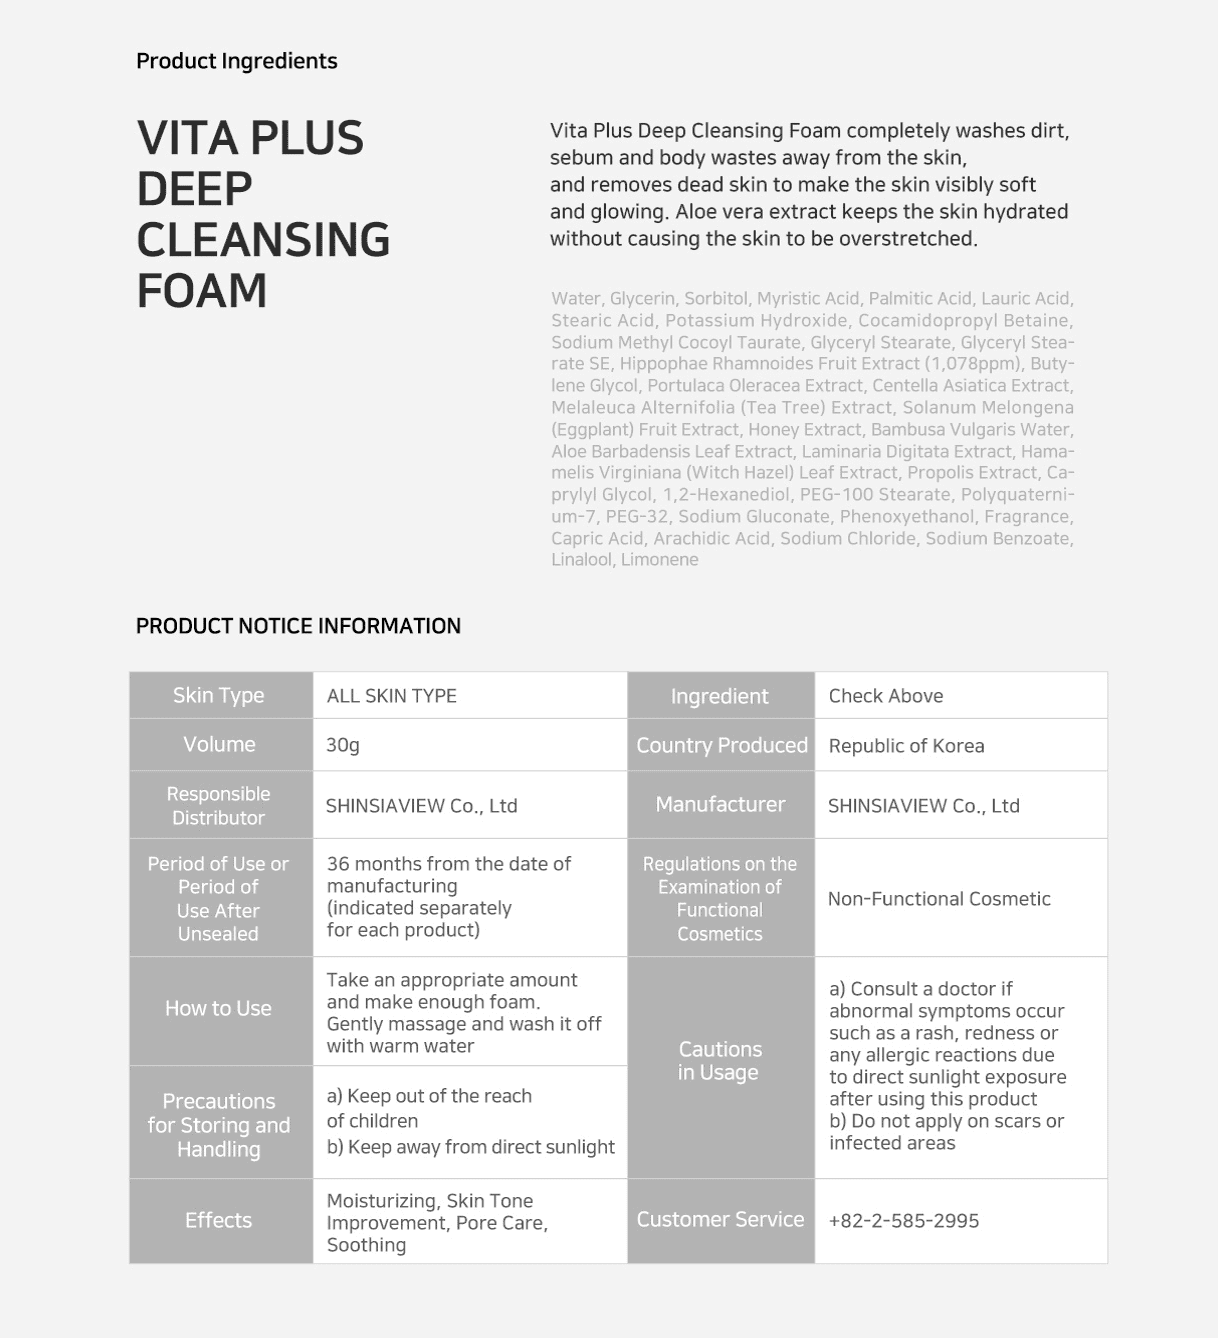 Shinsiaview Vita Plus Deep Cleansing Foam MiessentialStore